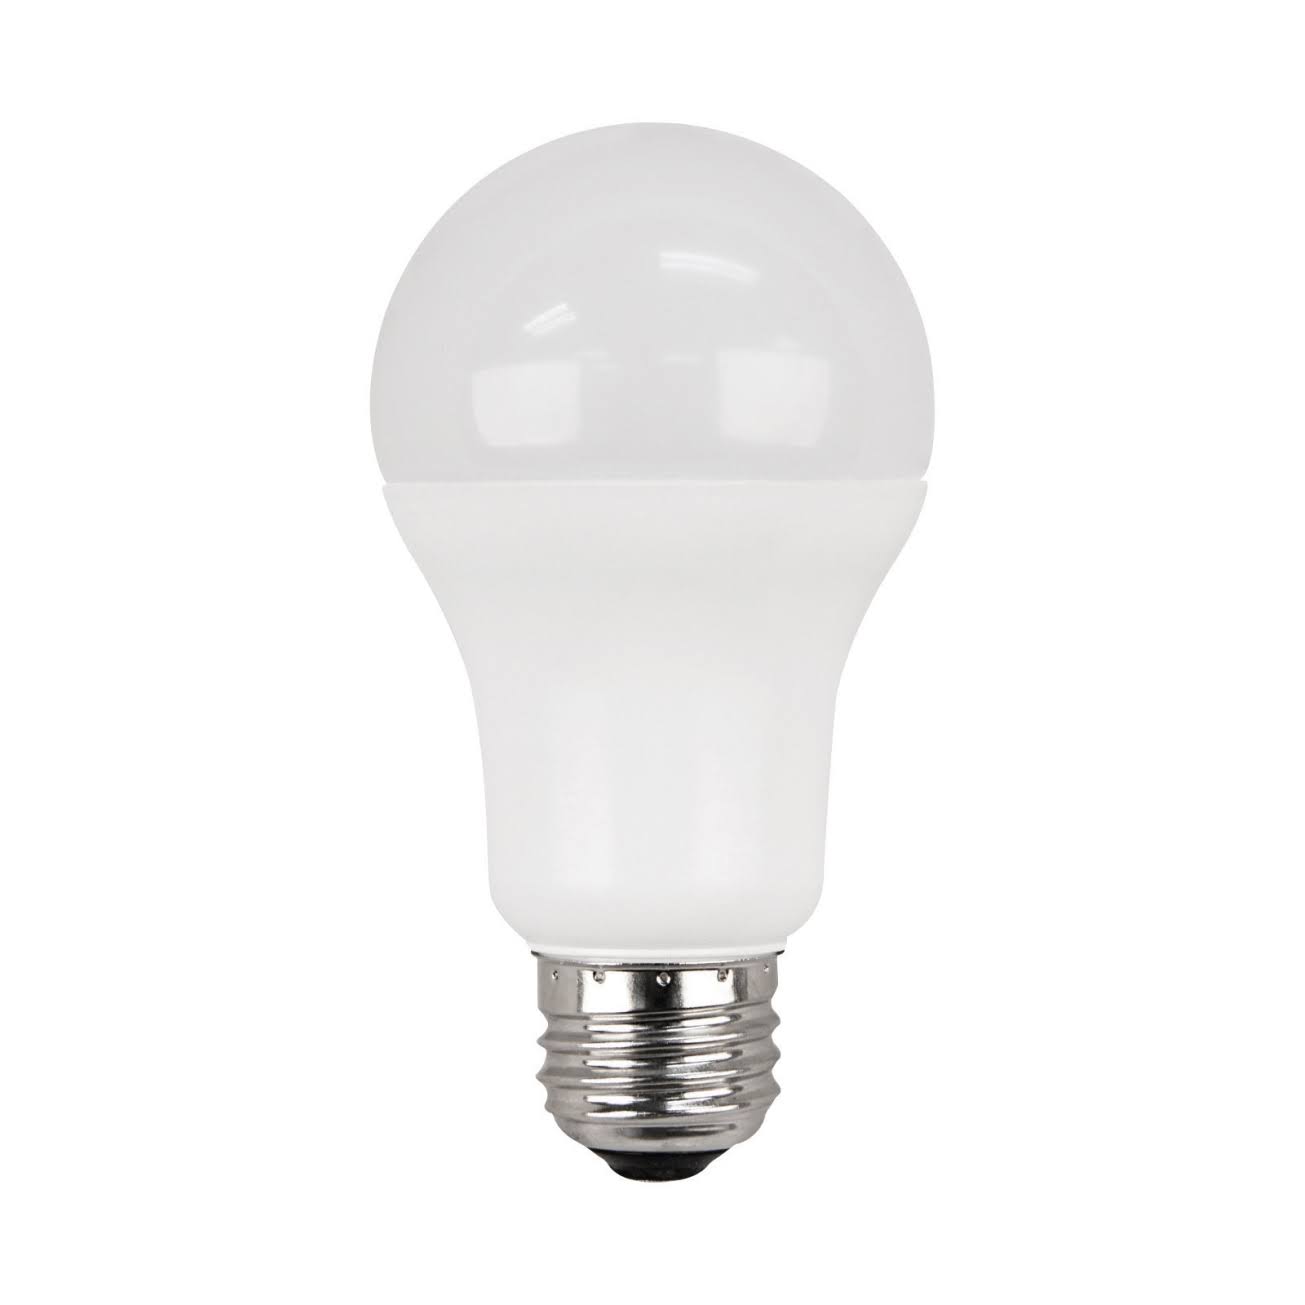 Ace A19 E26 (Medium) LED Bulb Daylight 100 Watt Equivalence 2 Pk